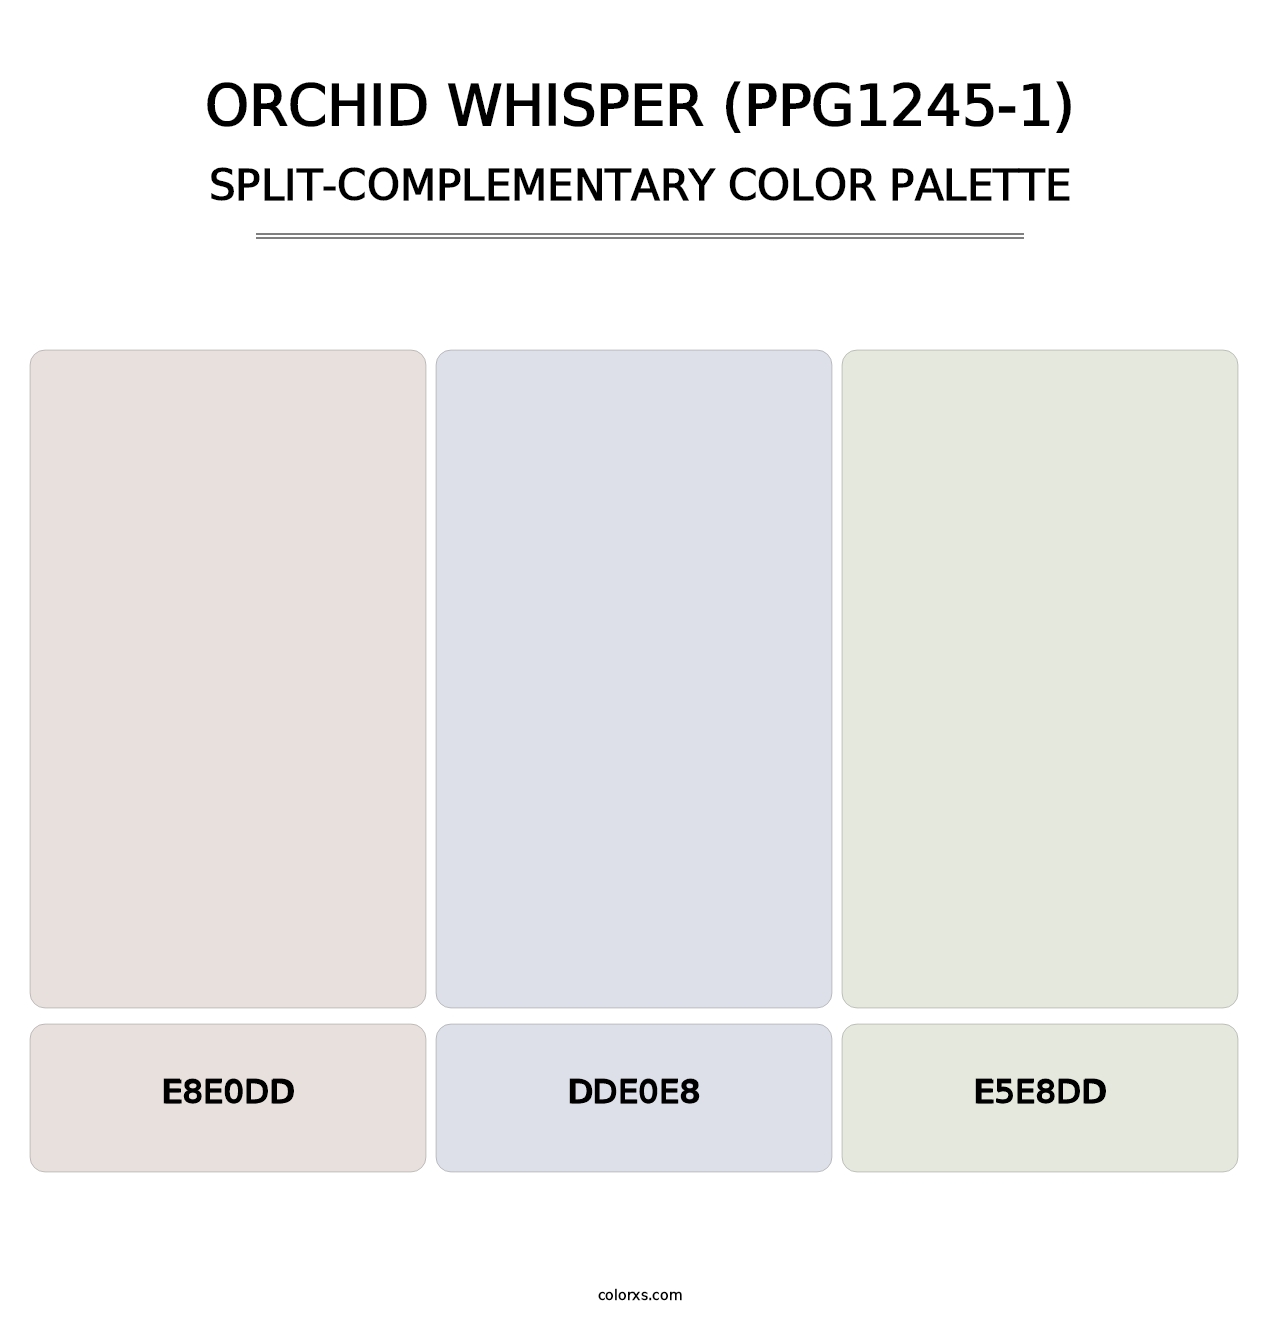 Orchid Whisper (PPG1245-1) - Split-Complementary Color Palette